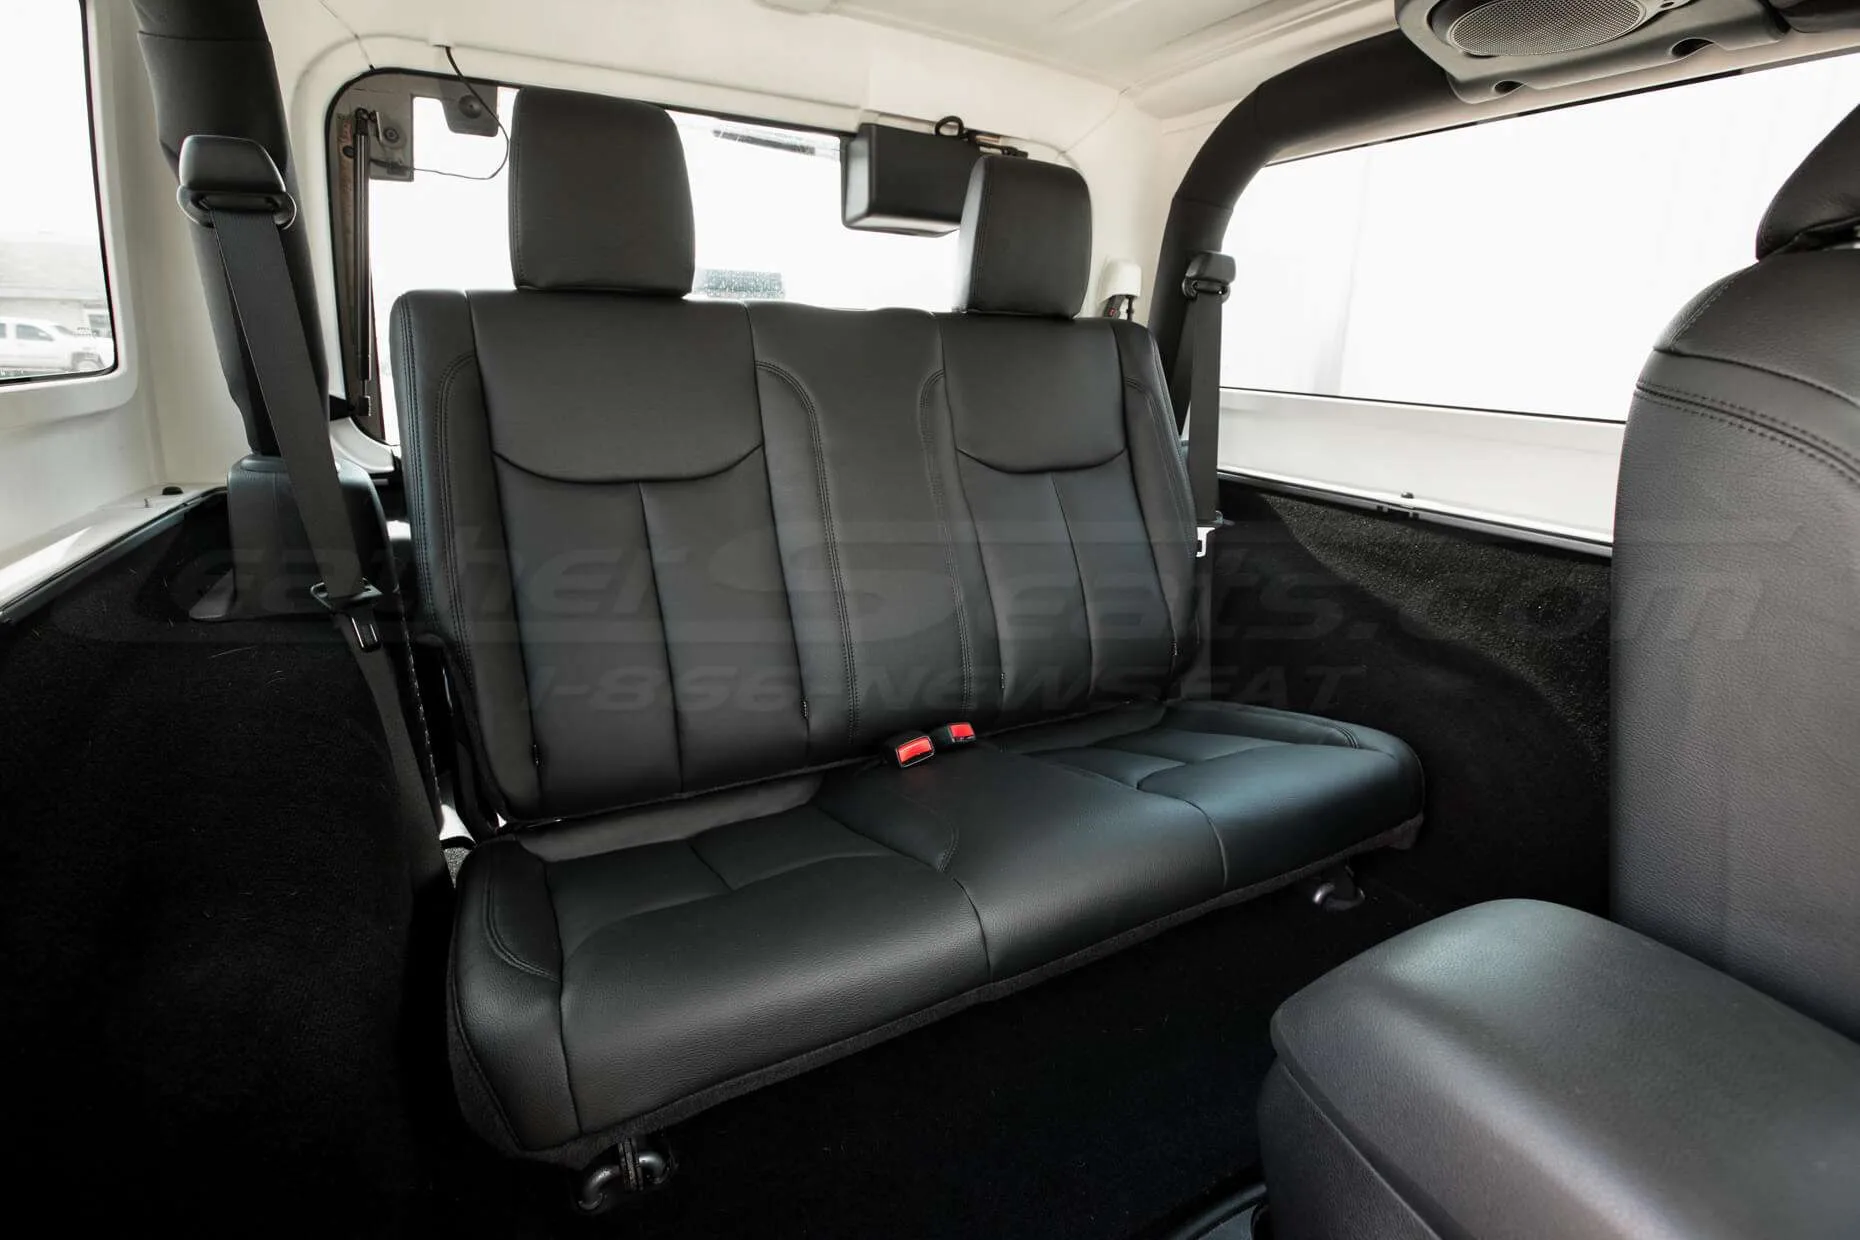 Jeep Wrangler Leather Seats - Black - Installed - Rear seats